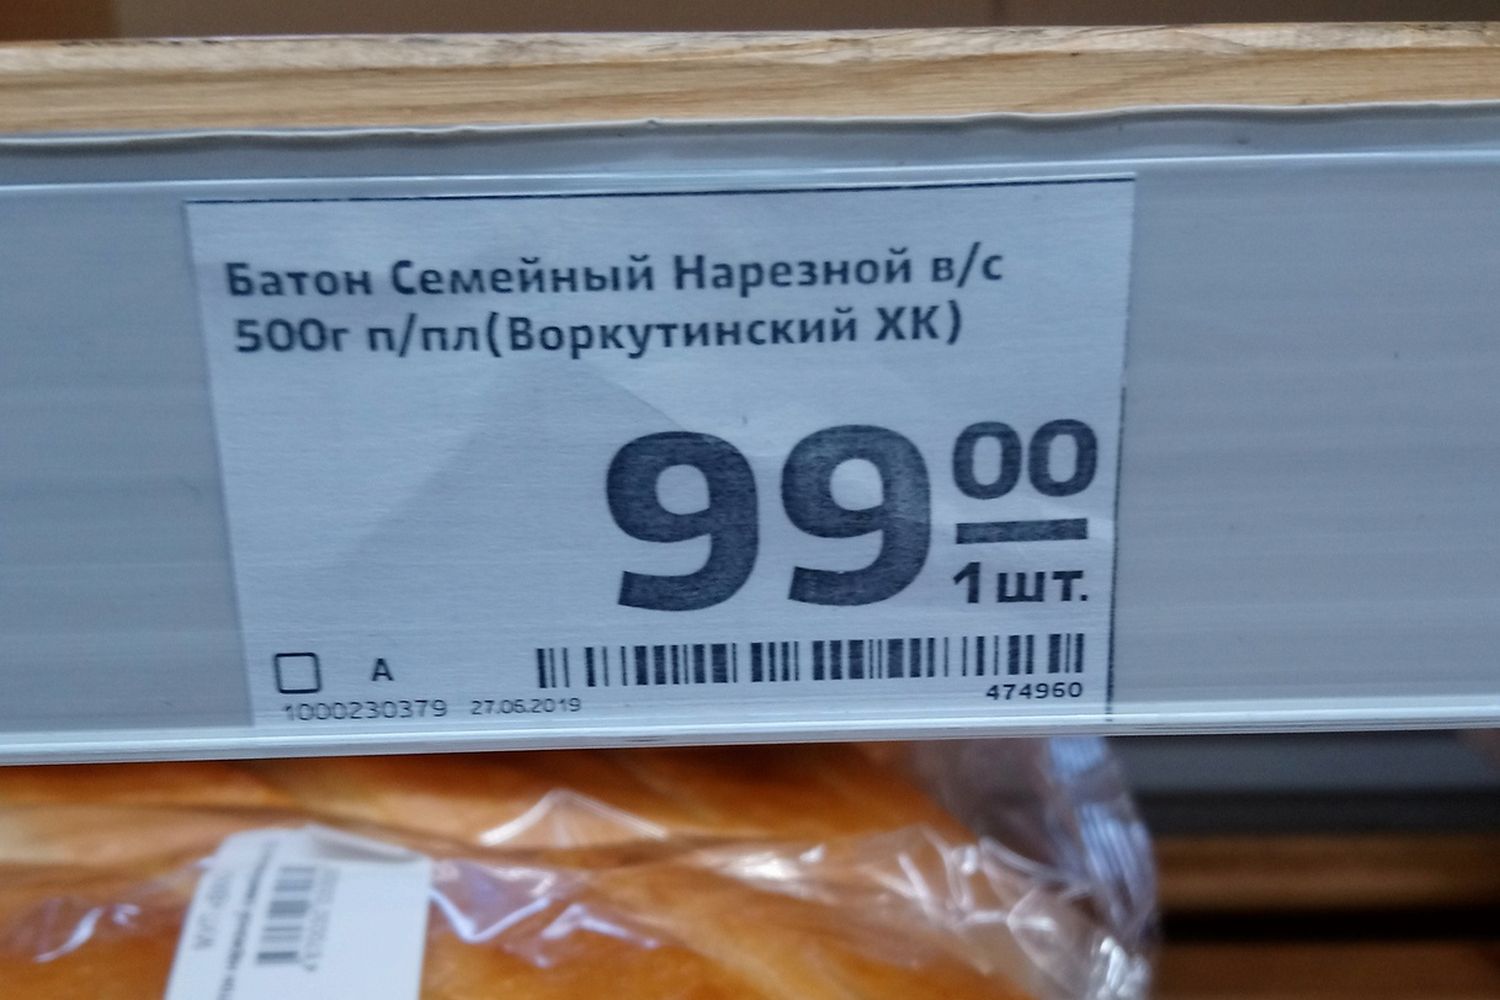 Батон подорожал на 3 рубля на сколько. Ценник 100 рублей. Ценник на хлеб. Хлеб 100 рублей. Воркутинский хлеб.